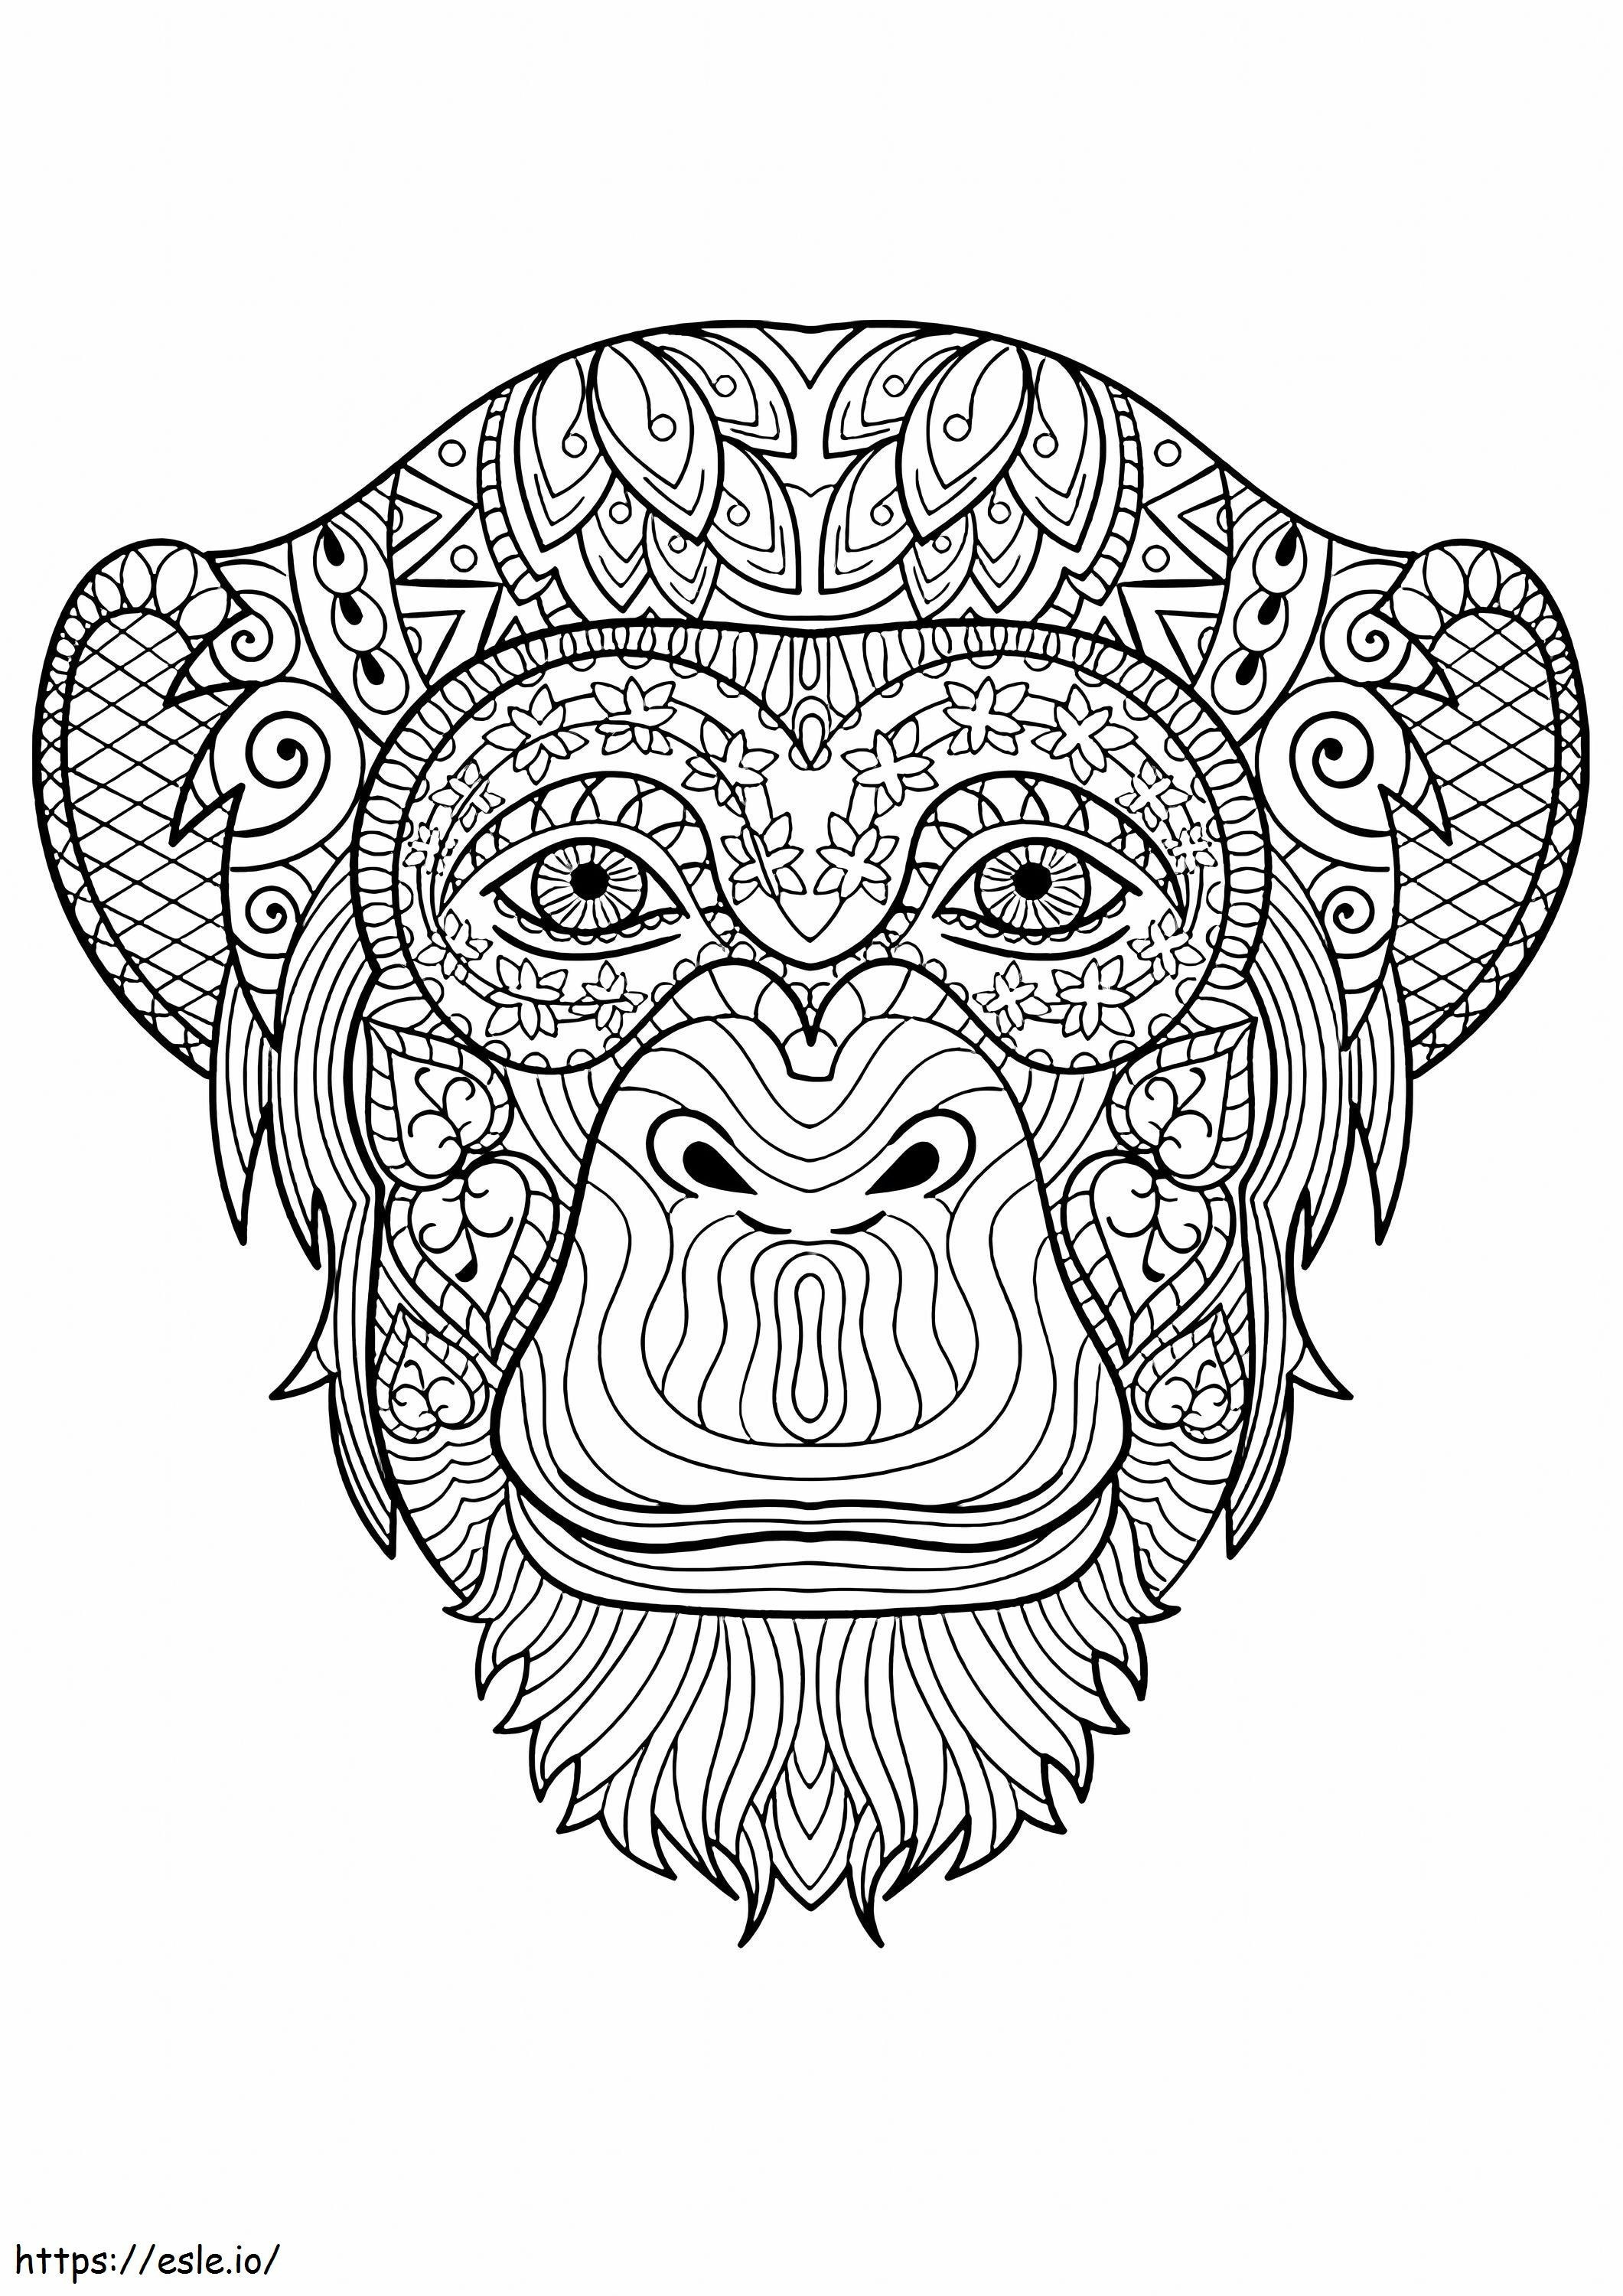 Affenkopf-Mandala ausmalbilder